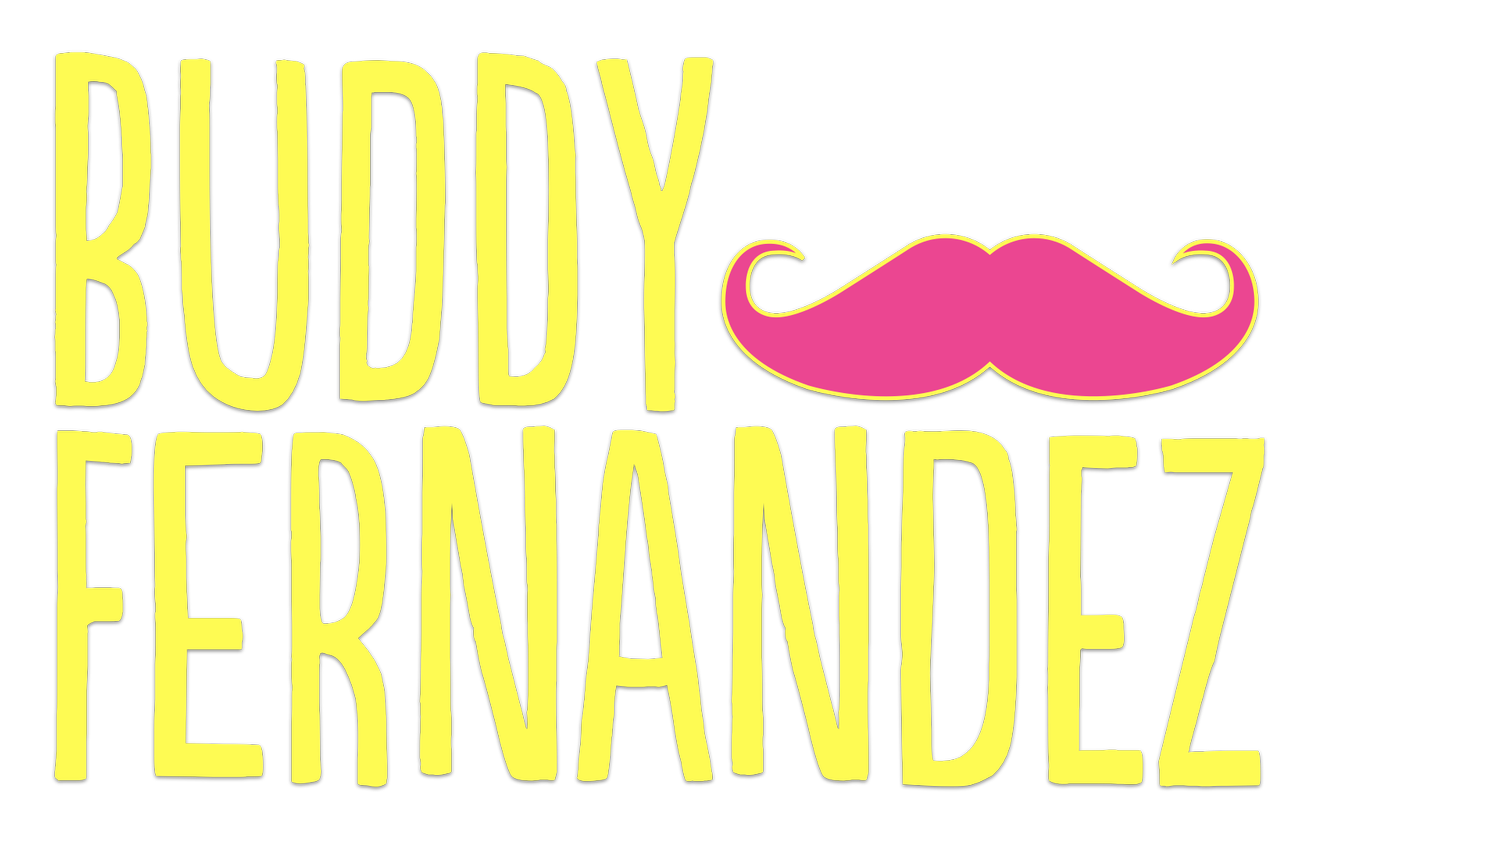 The Buddy Fernandez Card Company